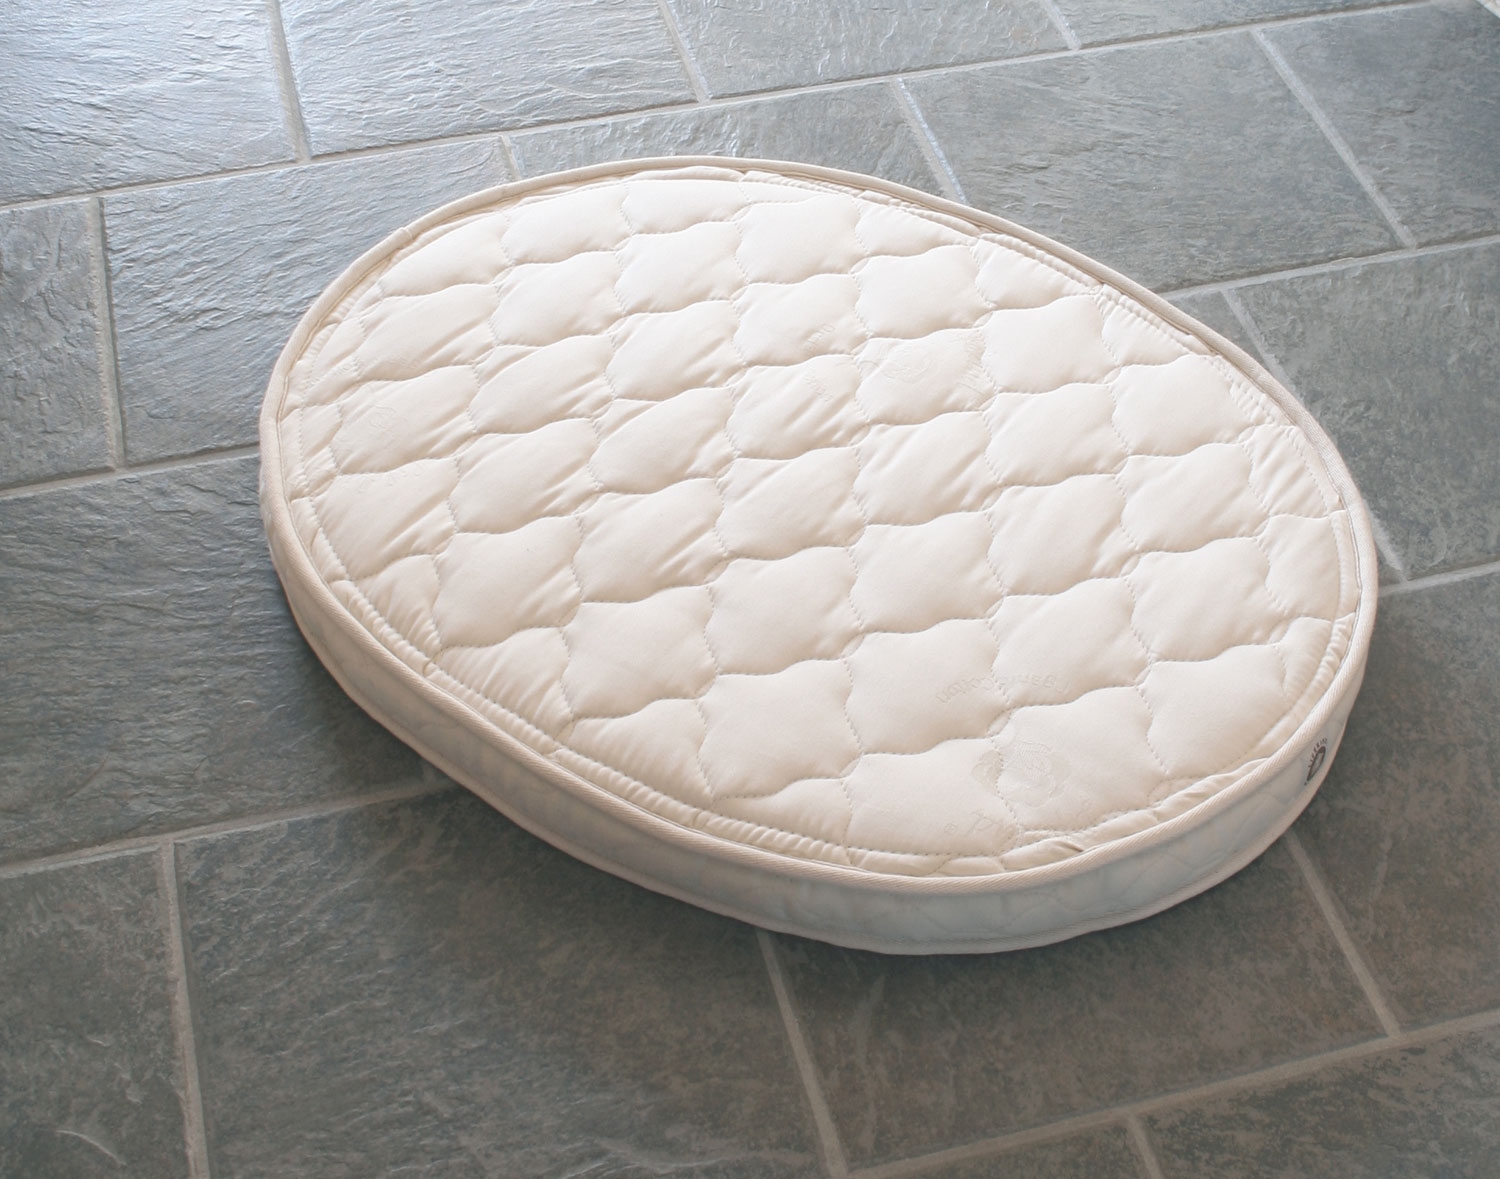 oval crib mattress sheets